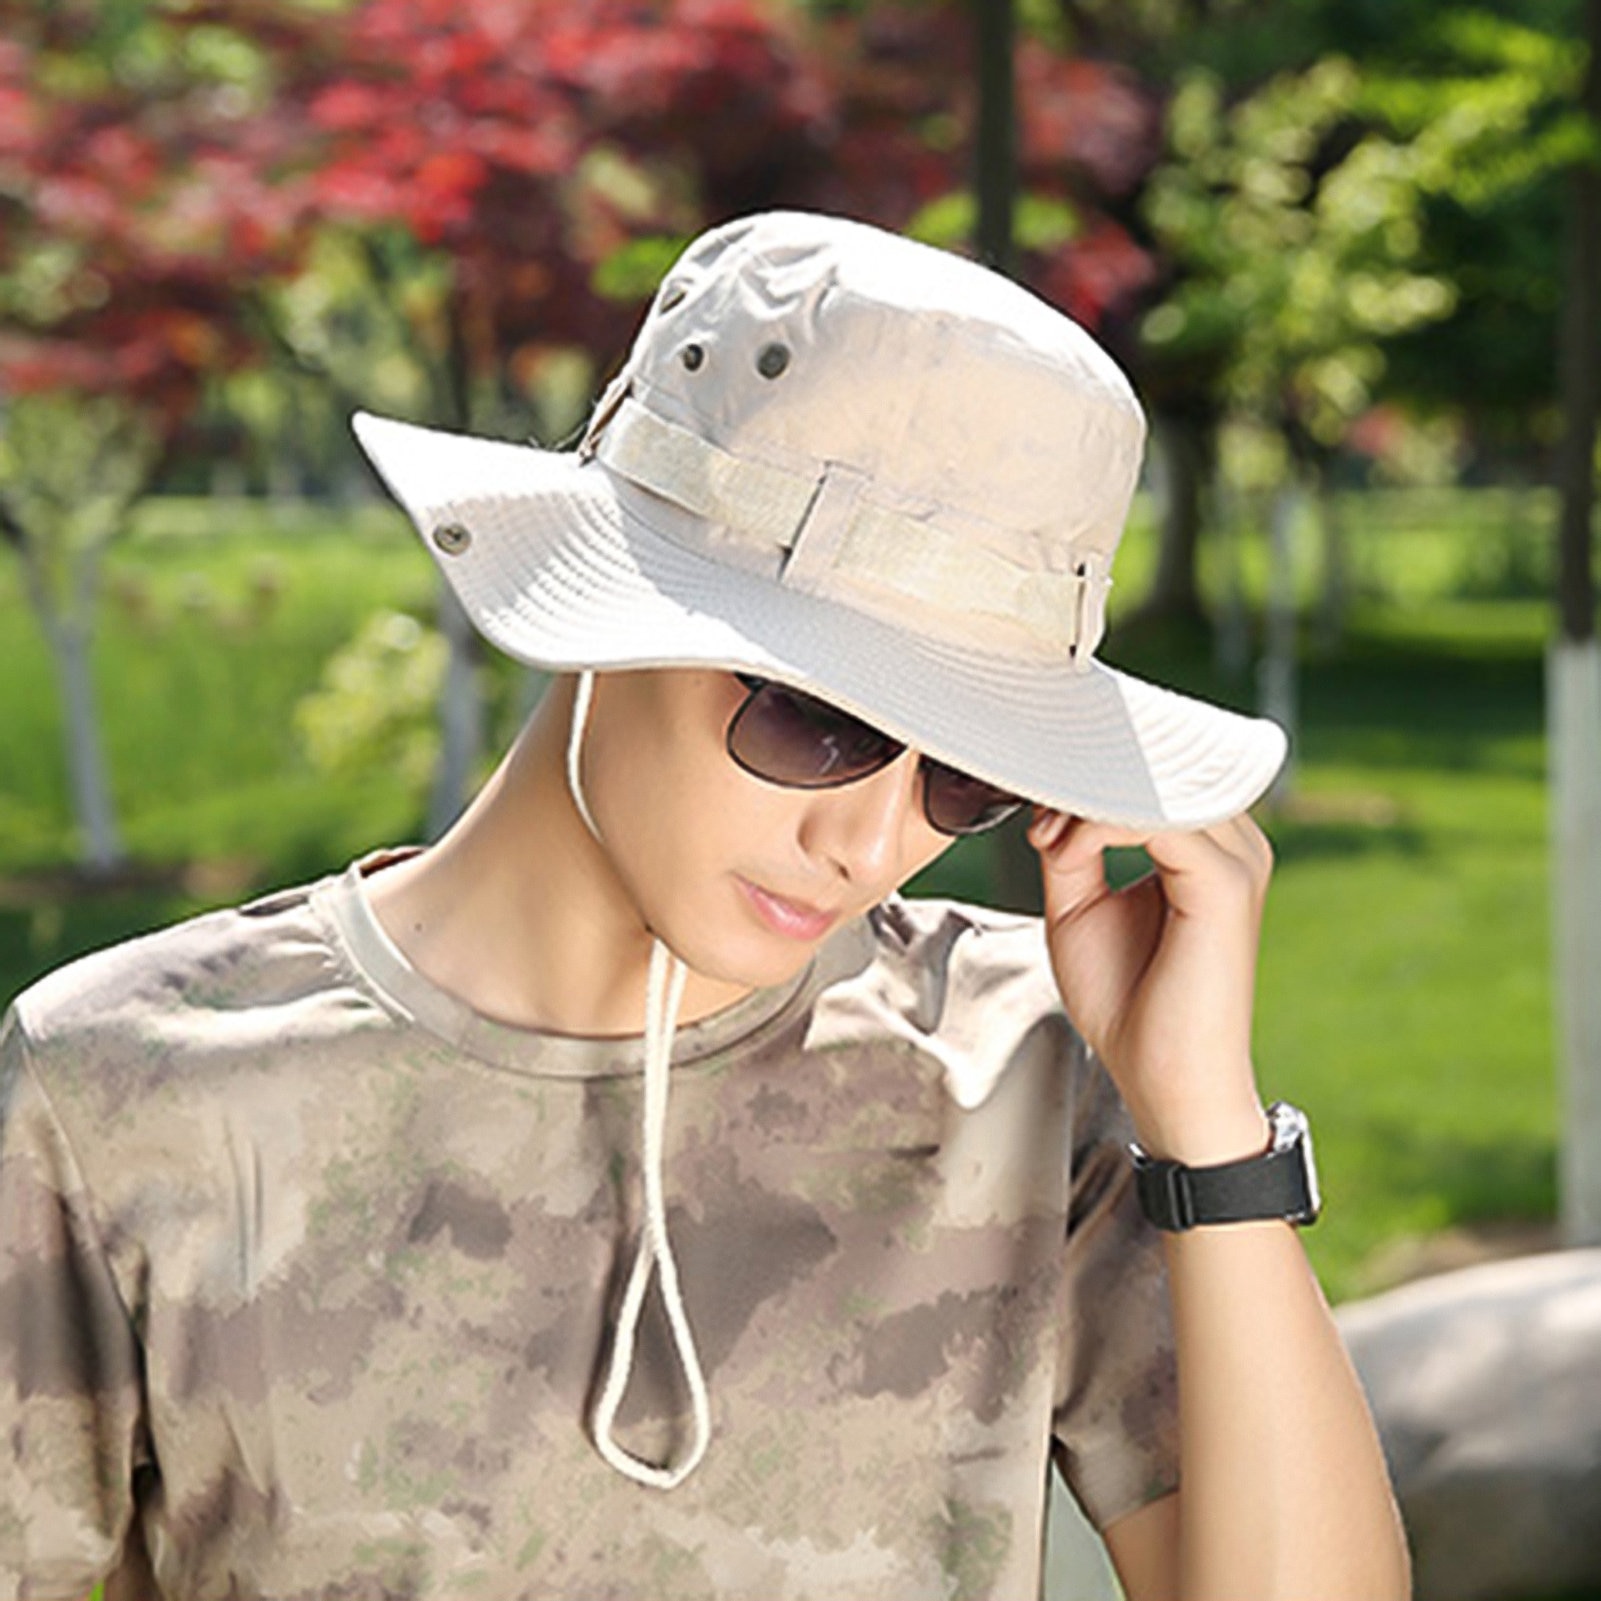 UV Protective Outdoor Fishing Hat: Lightweight, Stylish